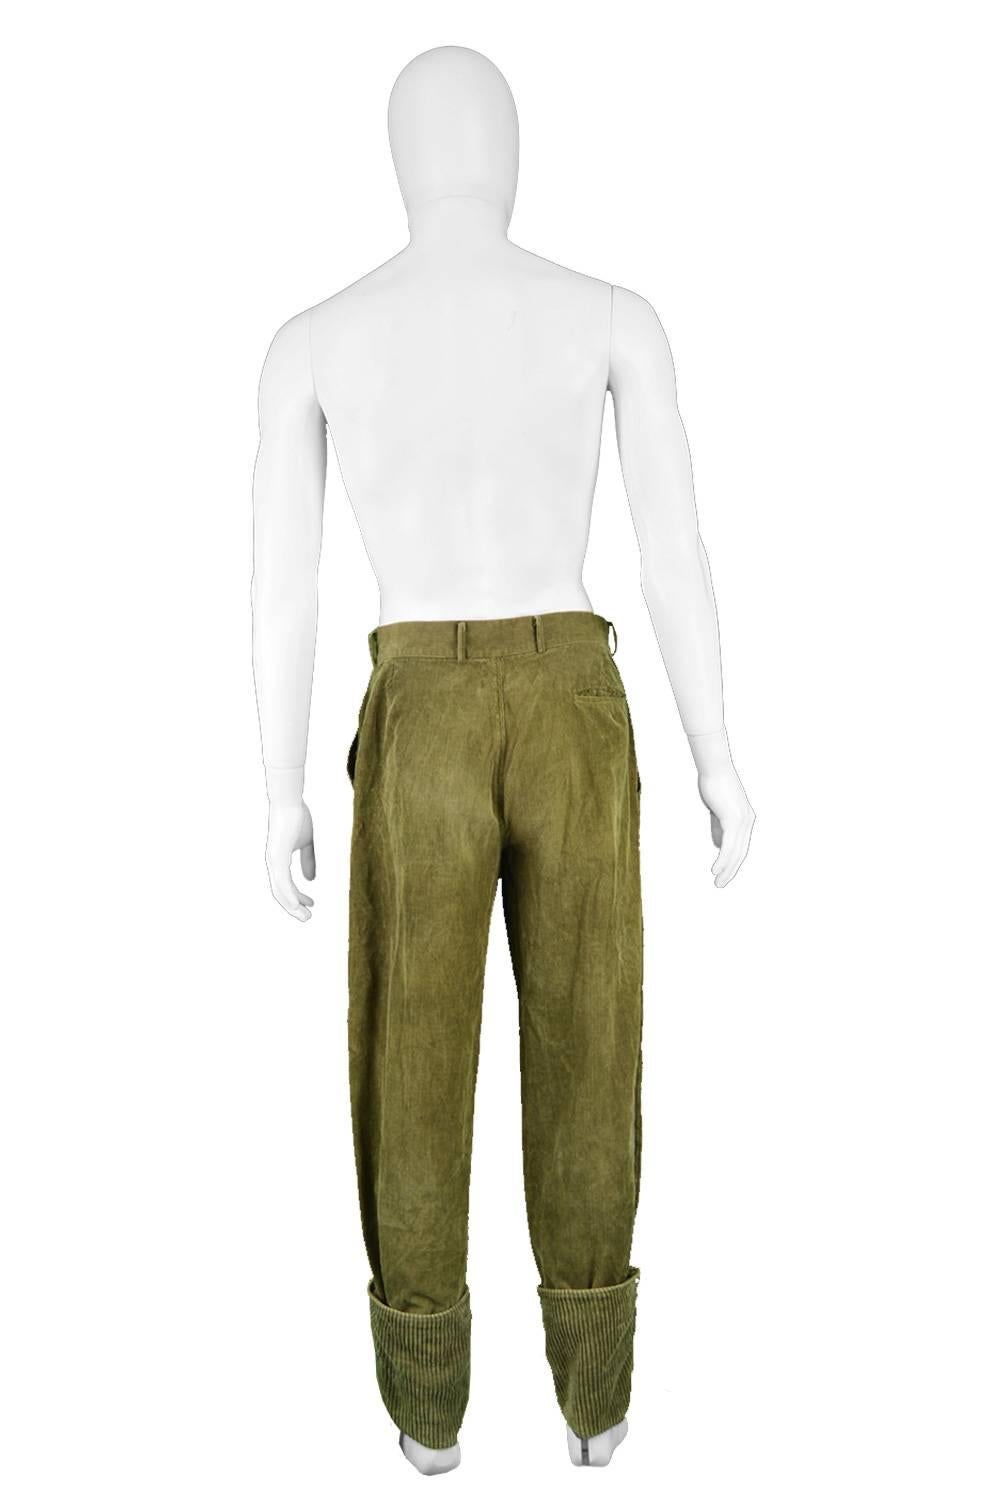 Gianni Versace Men's Green Corduroy Pants with Jumbo Cord Turn Ups, 1980s For Sale 1